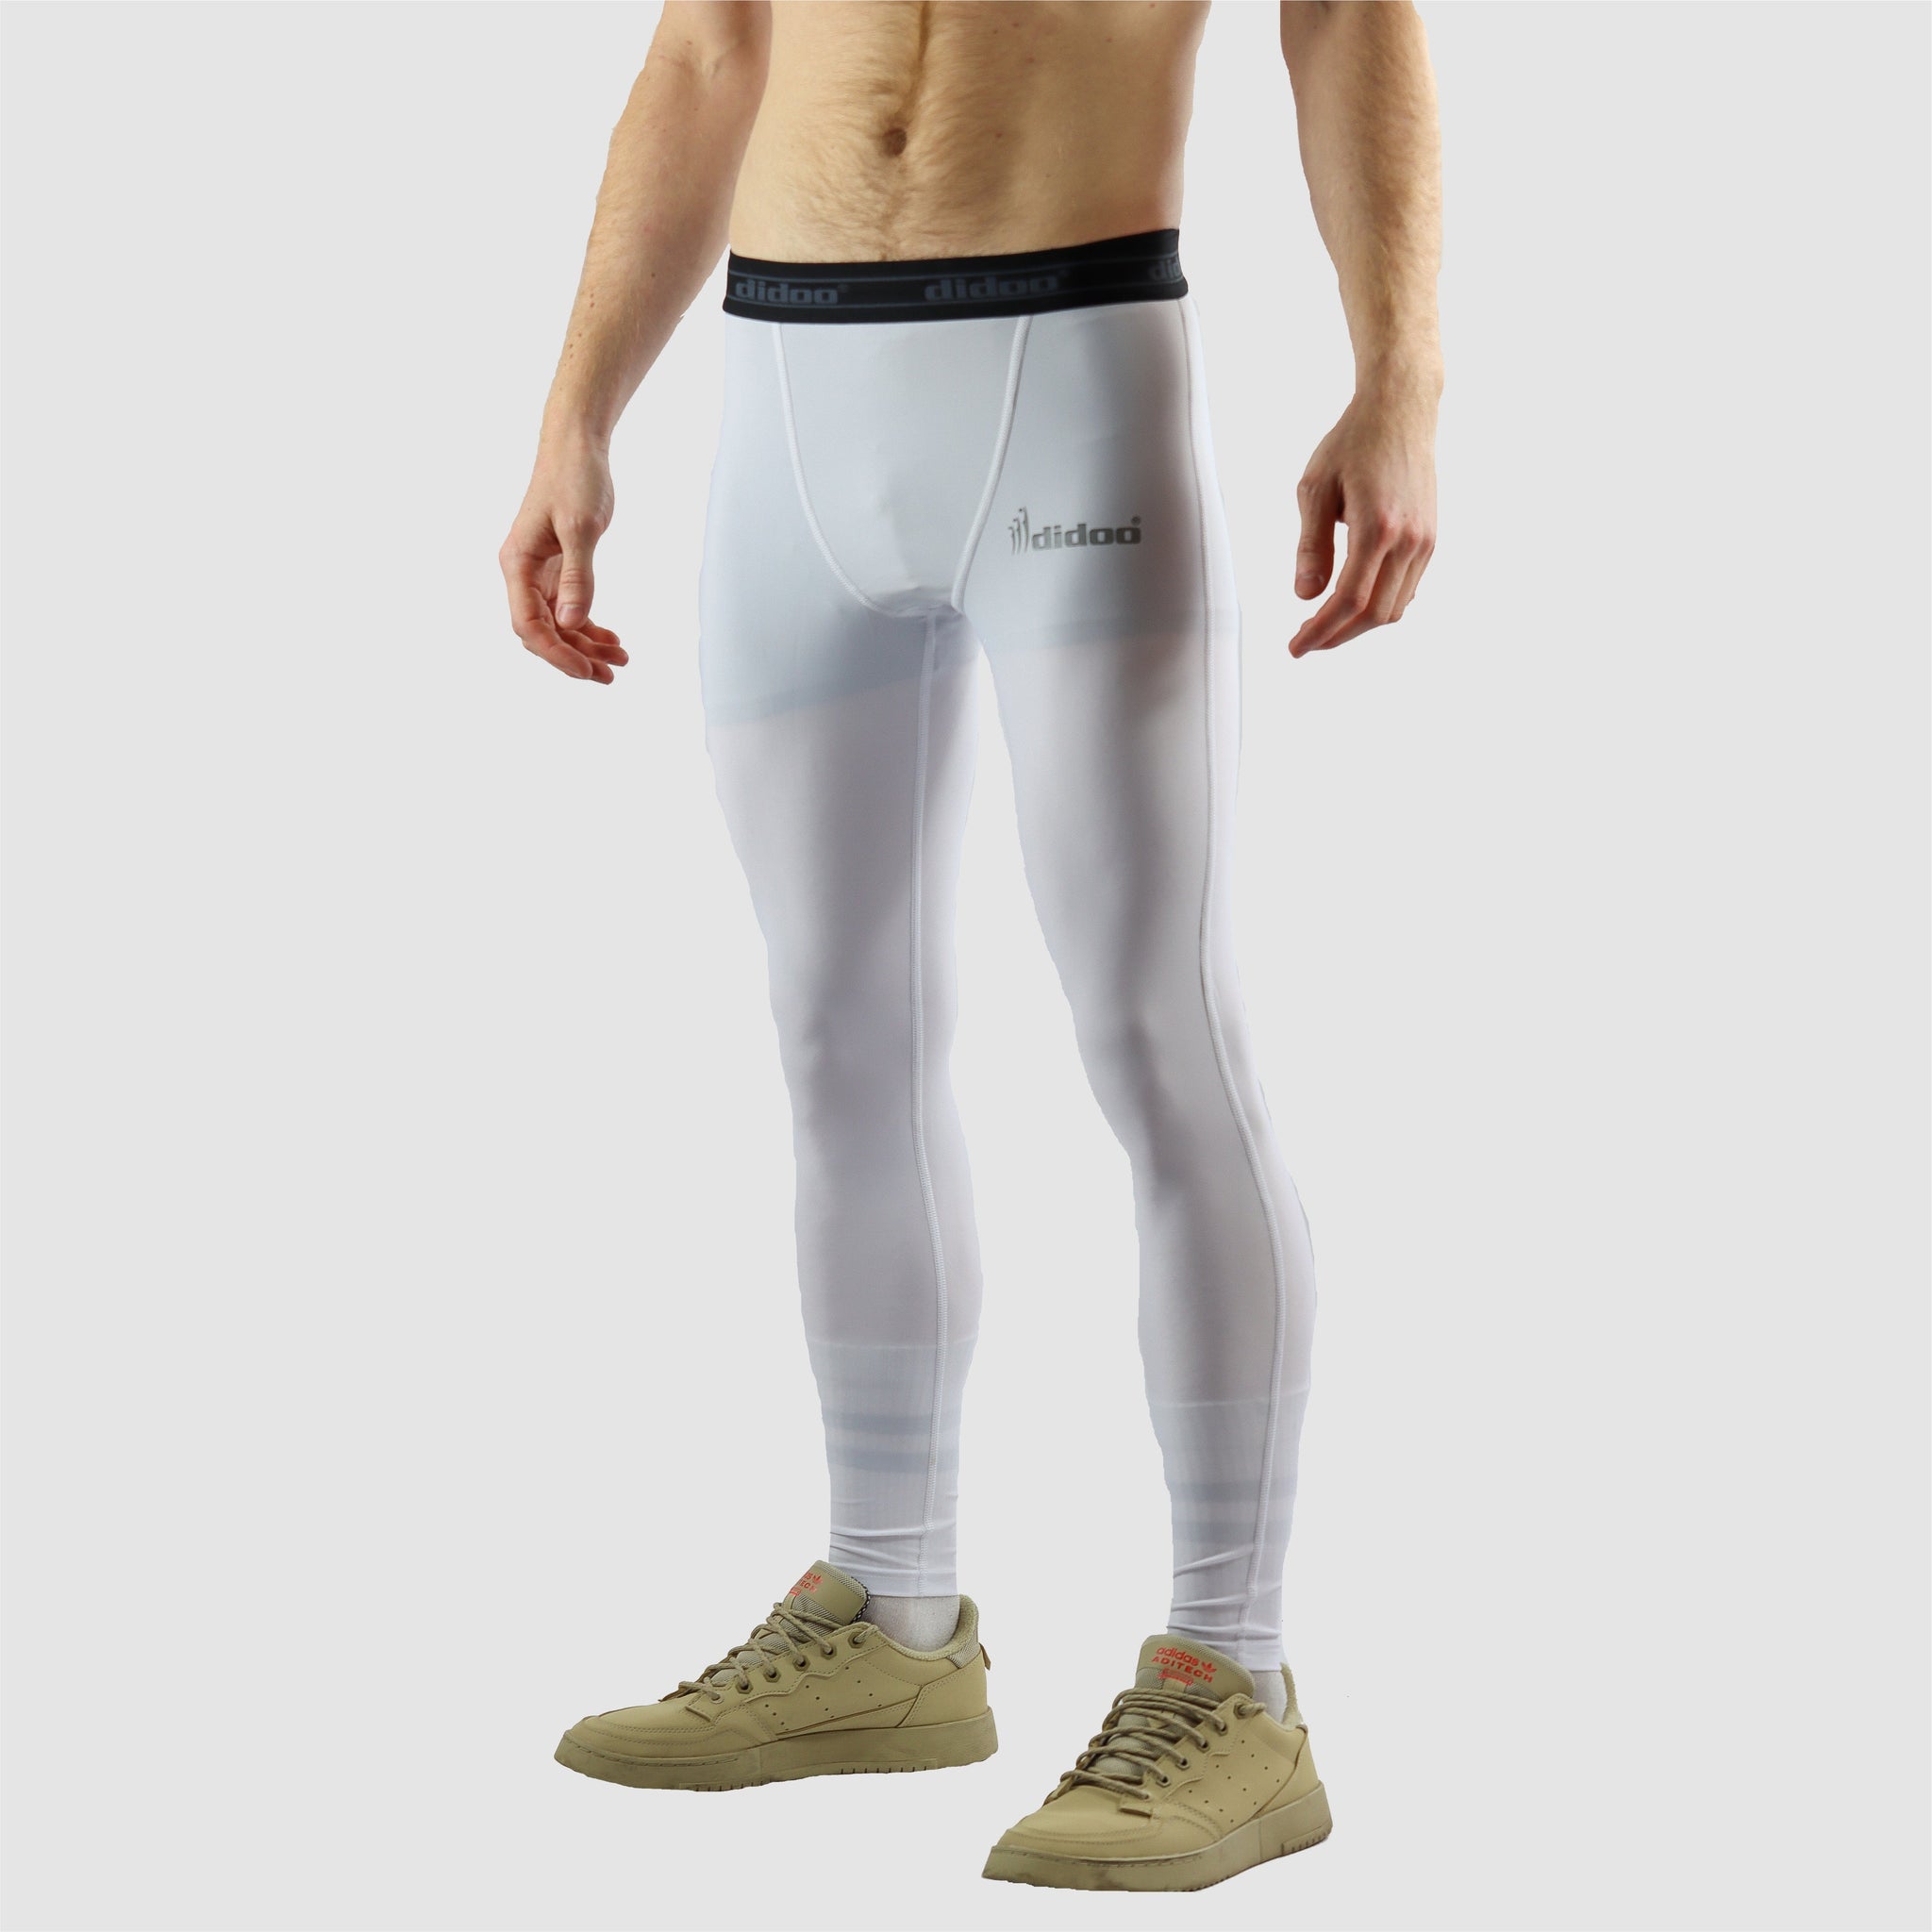 White DiDOO Men's Compression Base Layer Leggings